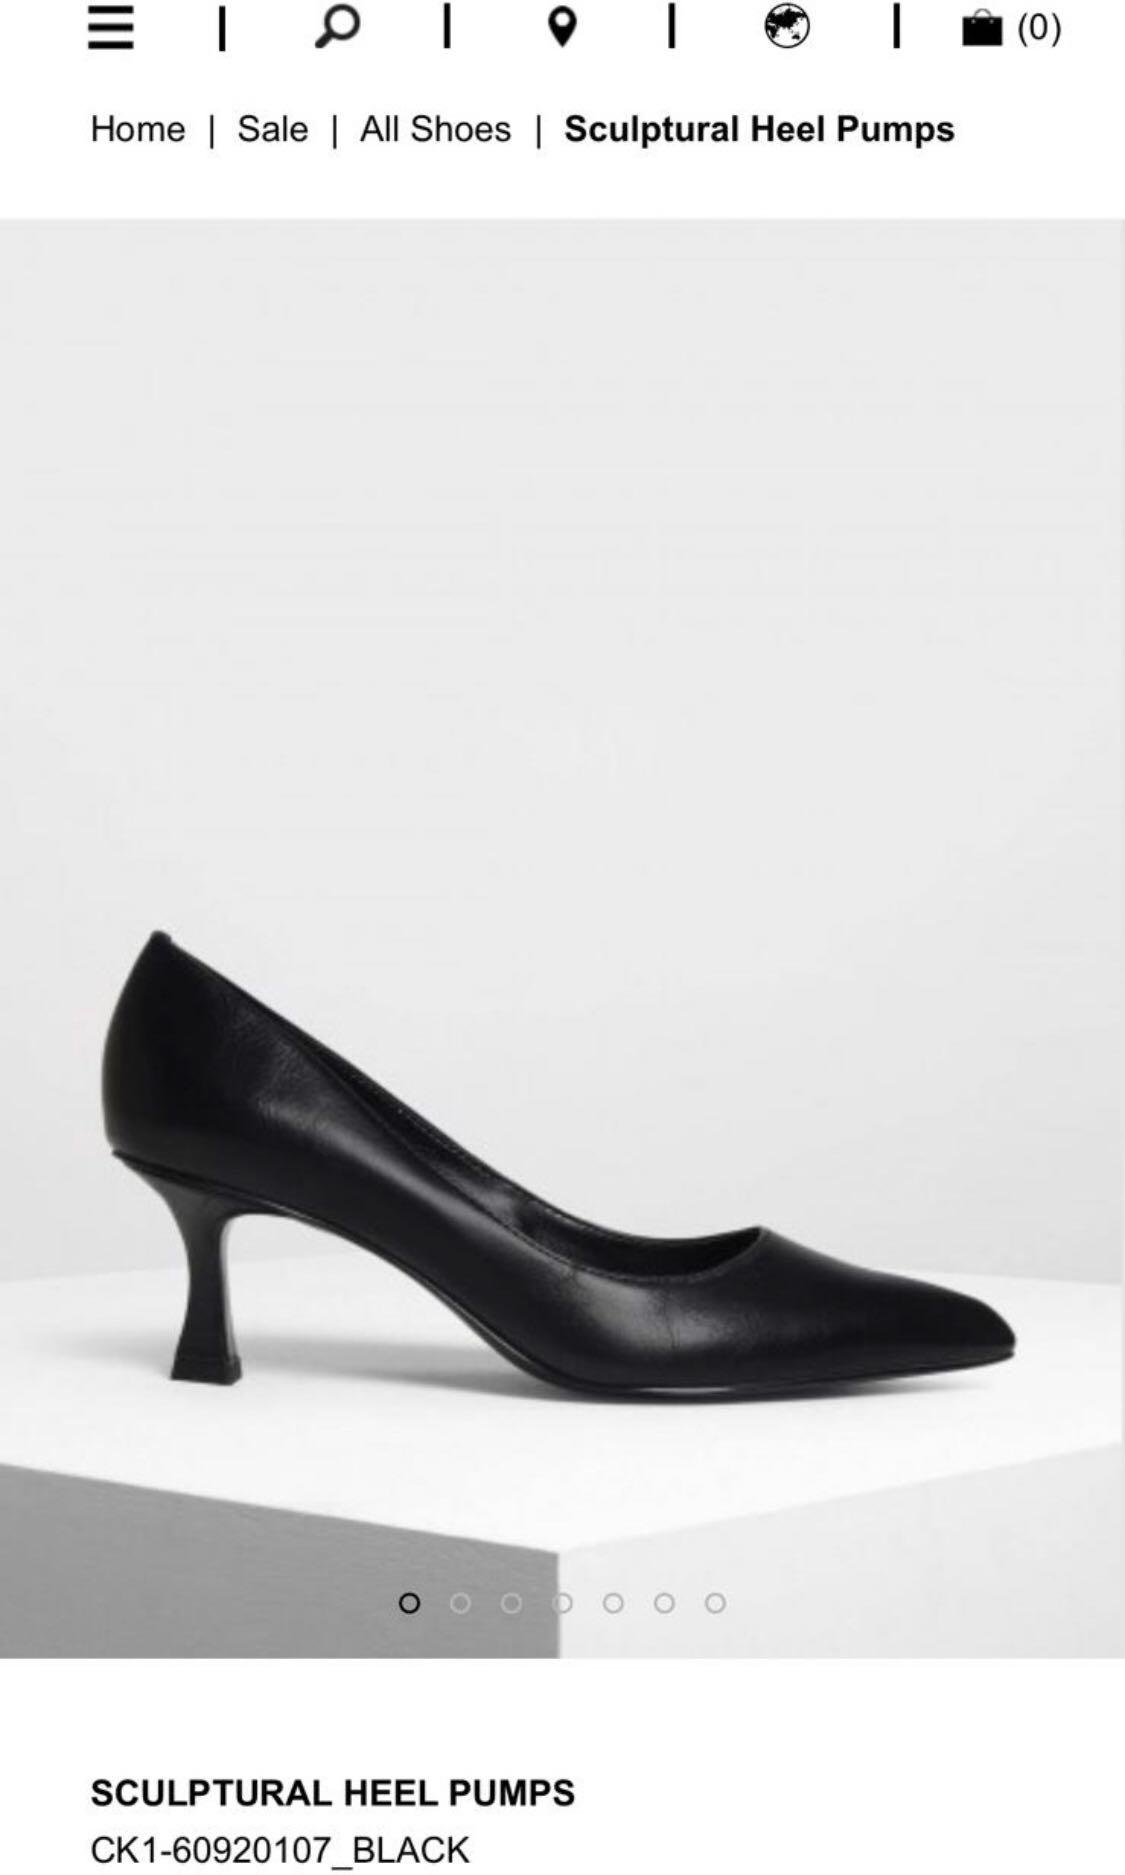 black box heels